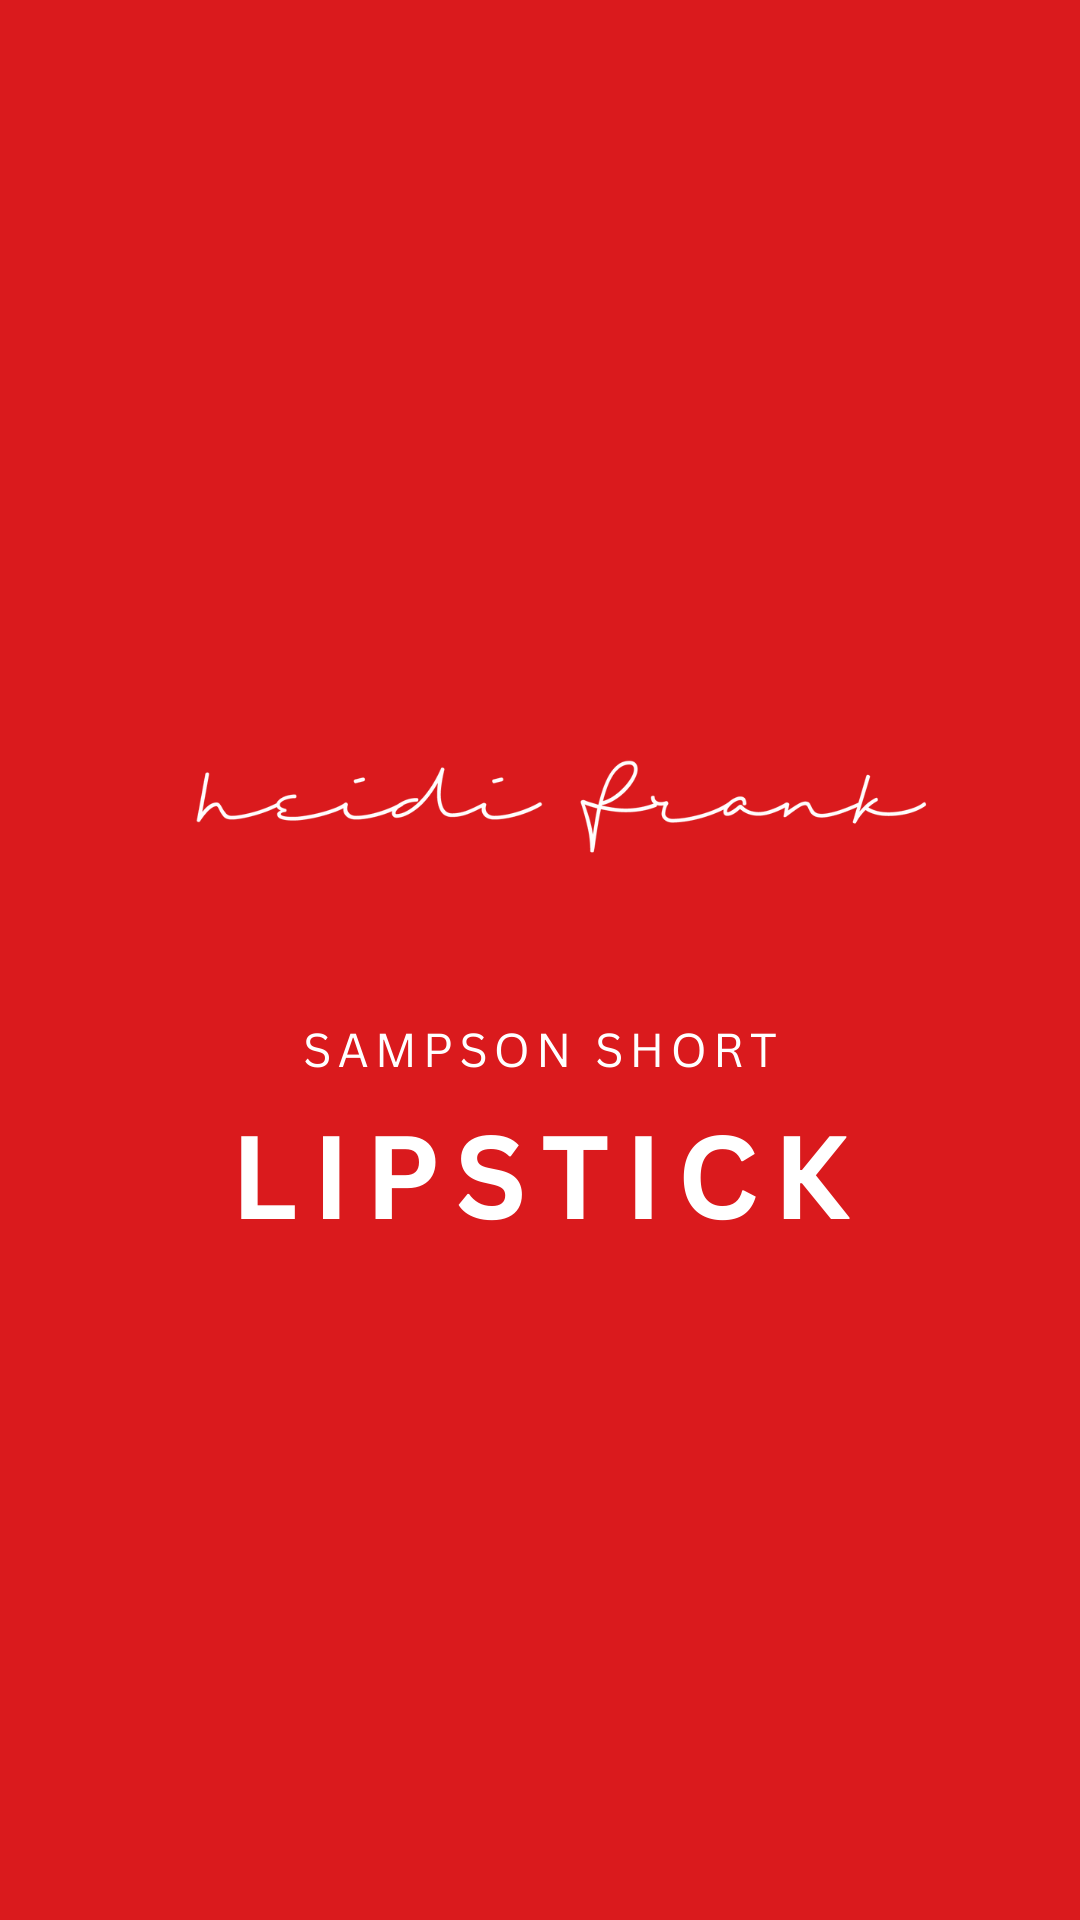 Sampson Short - Lipstick